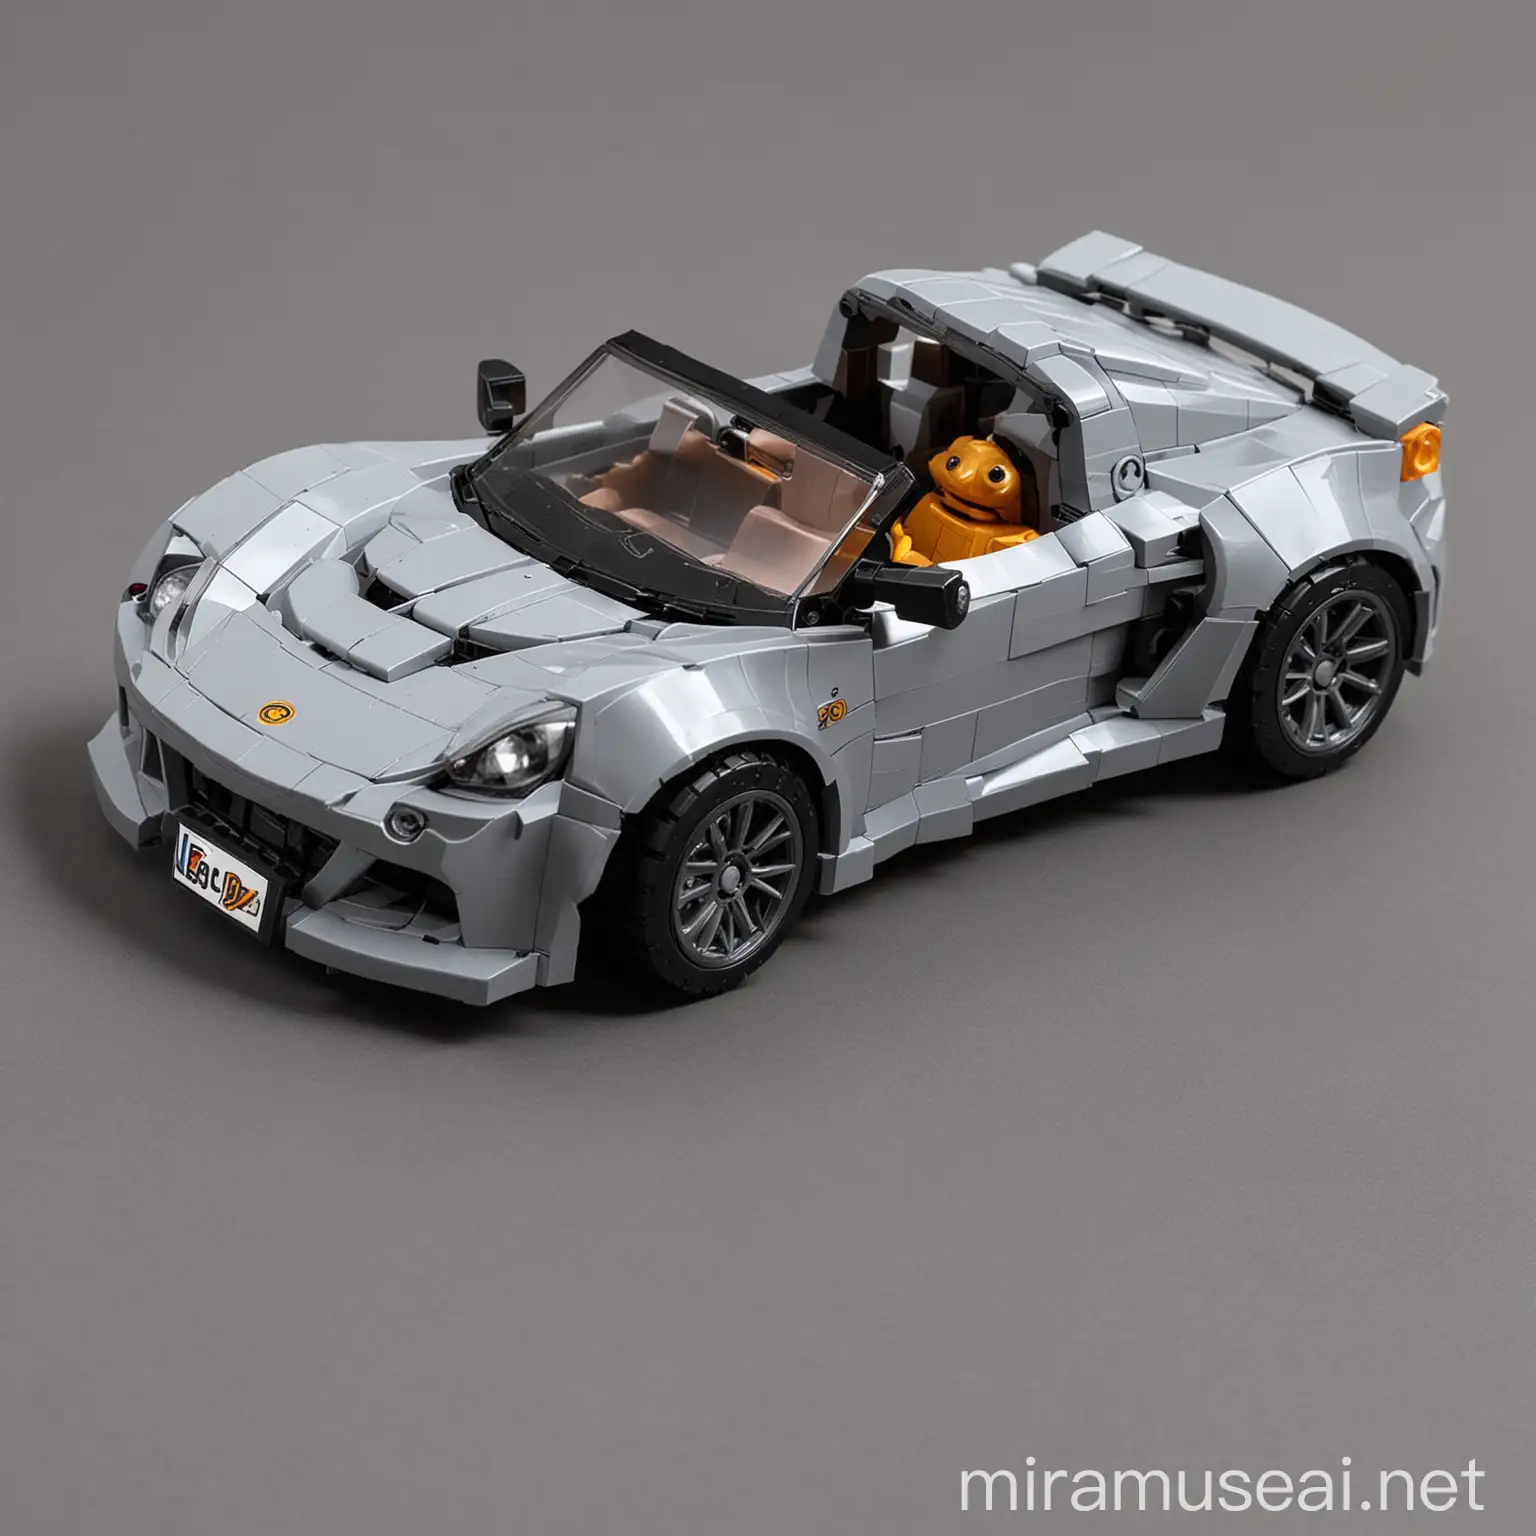 Grey Lotus Elise Lego model idea